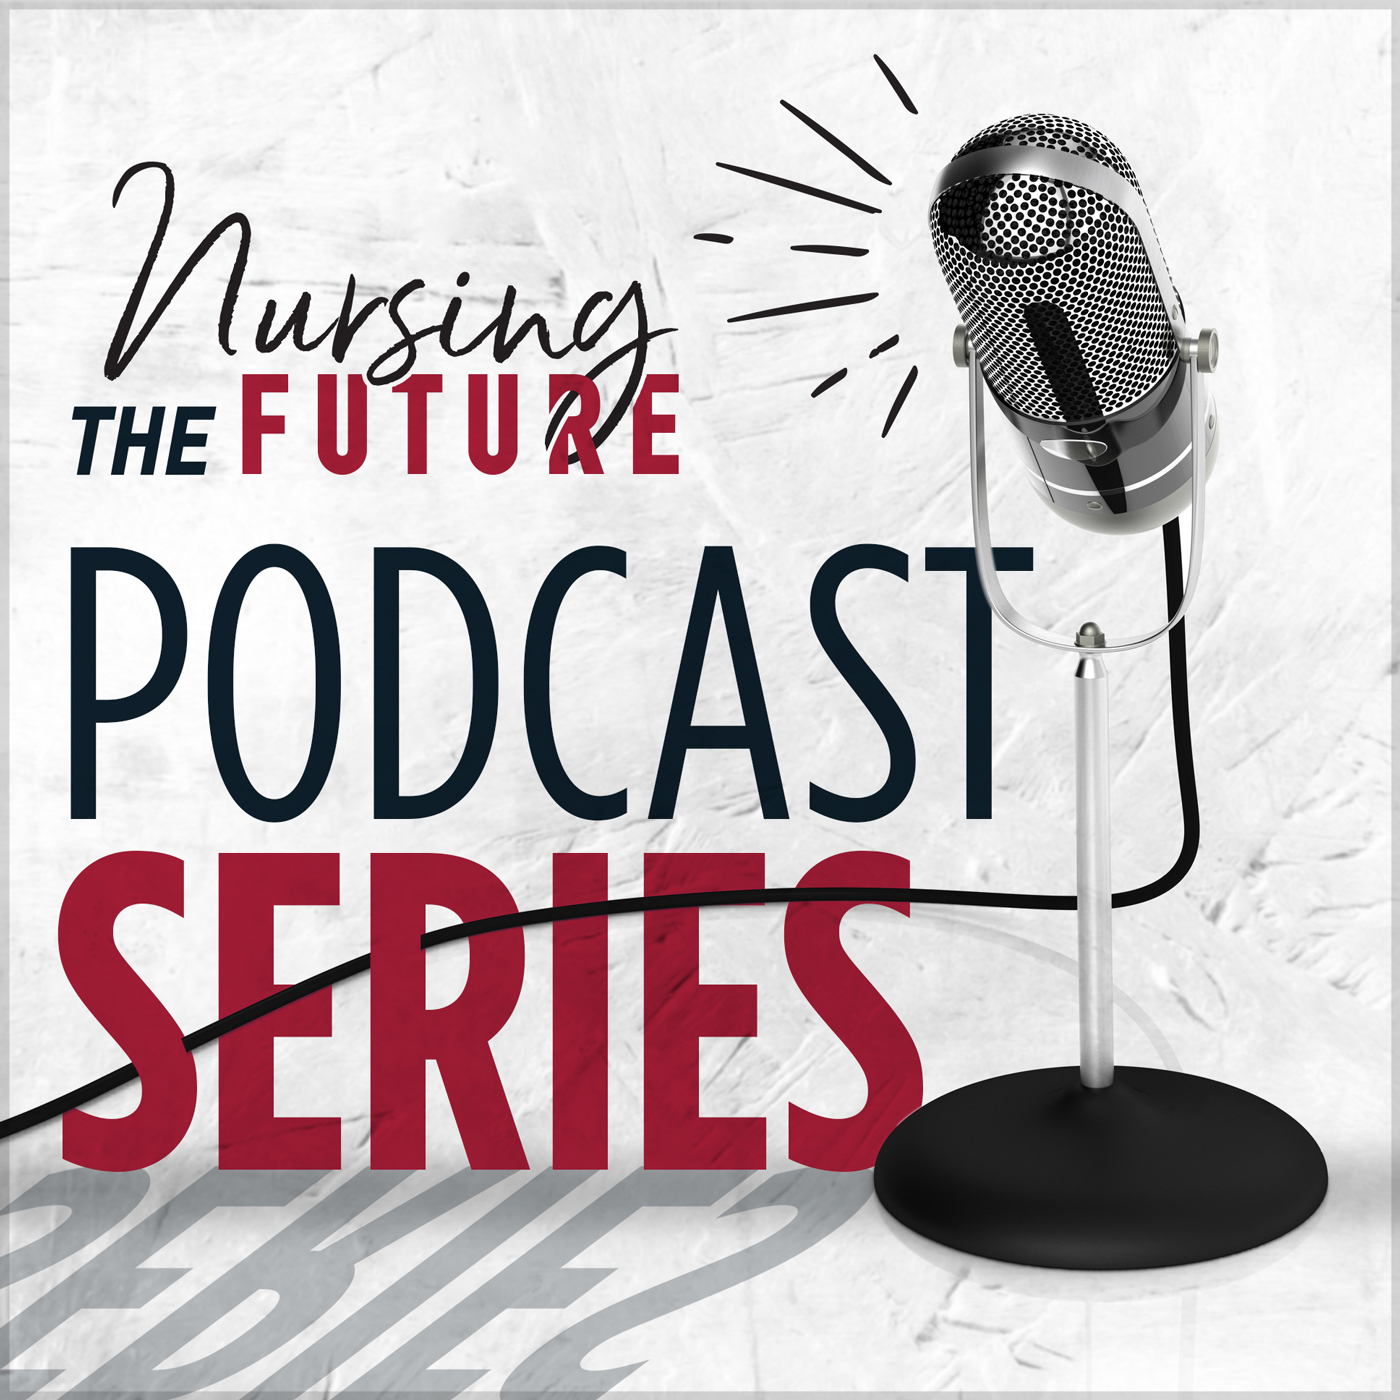 The nursingthefuture's Podcast